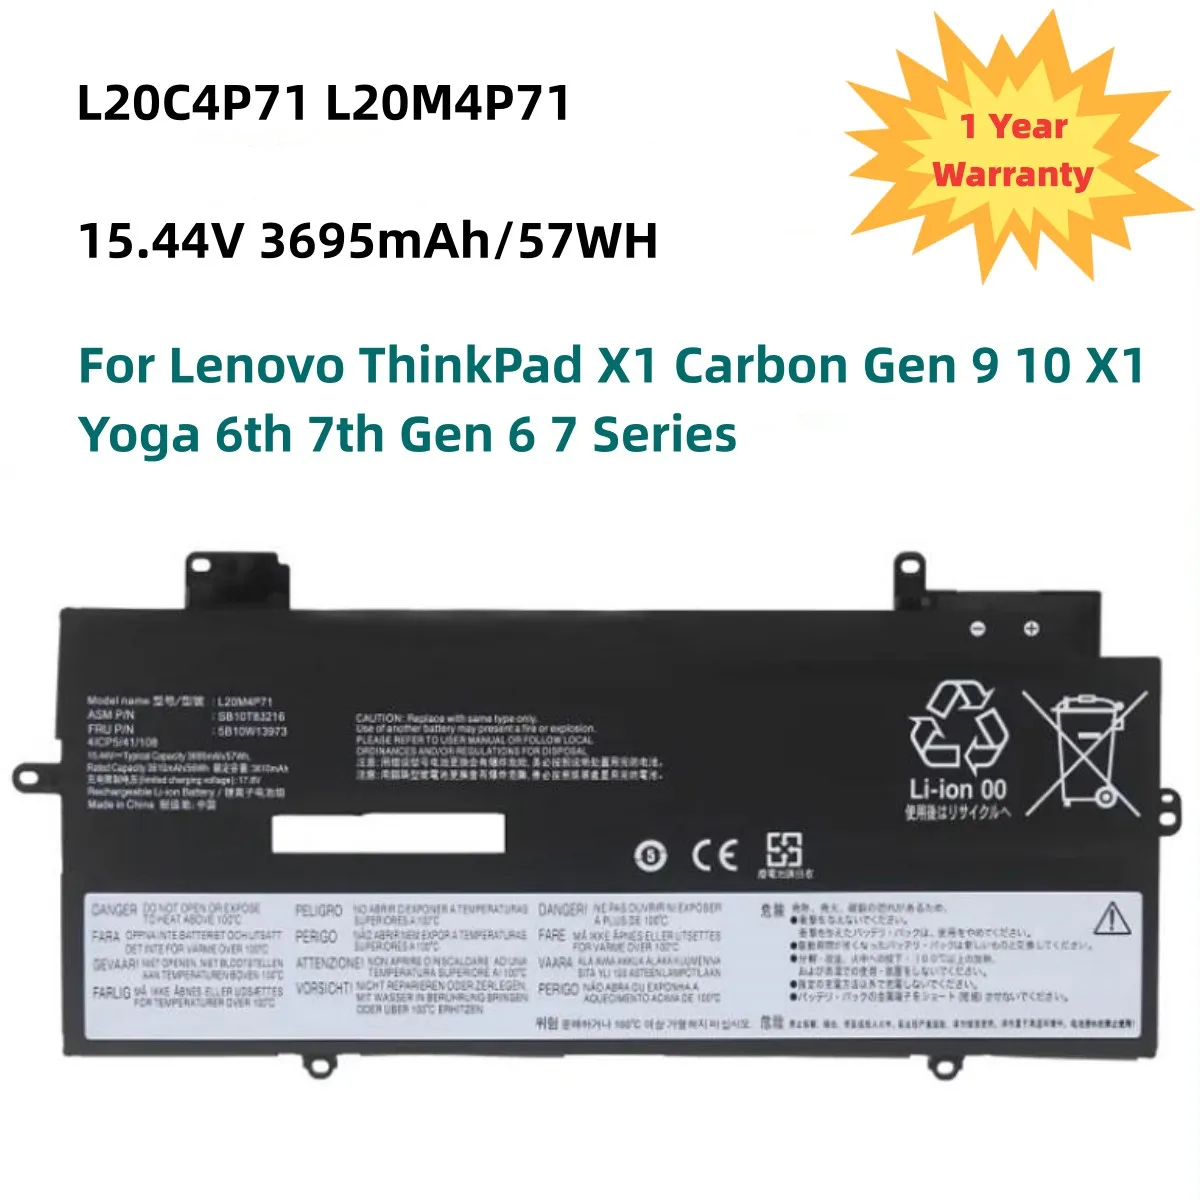 

L20C4P71 Laptop Battery For Lenovo ThinkPad X1 Carbon Gen 9 10 X1 Yoga 6th 7th Gen 6 7 Series L20D4P71 L20M4P71 15.44V 57WH